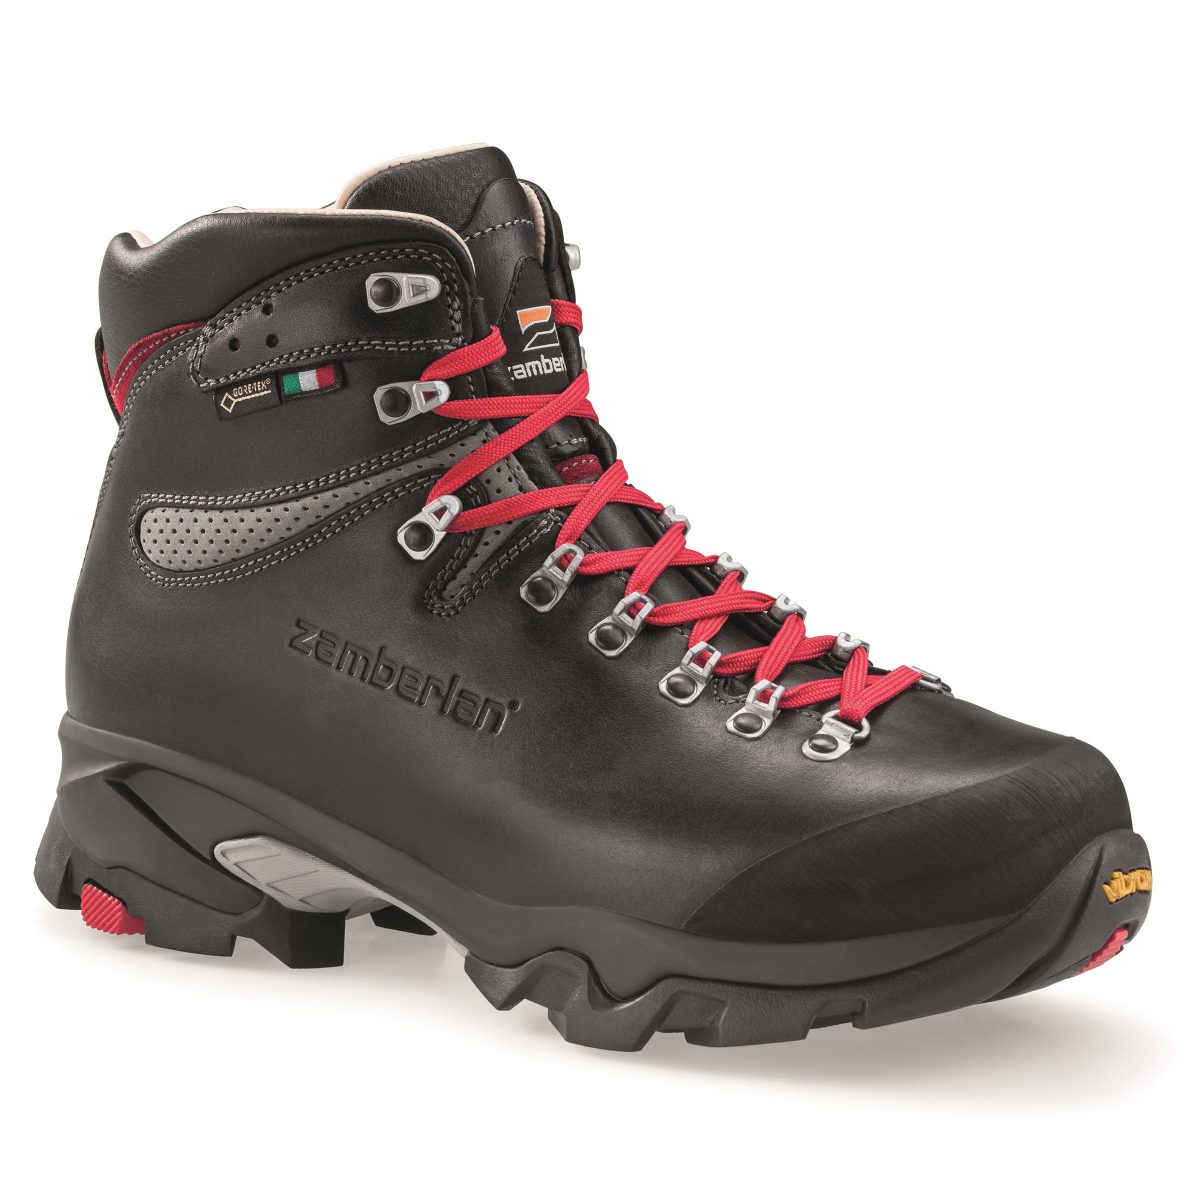 Zamberlan 1996 Vioz Lux GTX RR Waterproof Hiking Boots for Men - Waxed Black - 9.5M